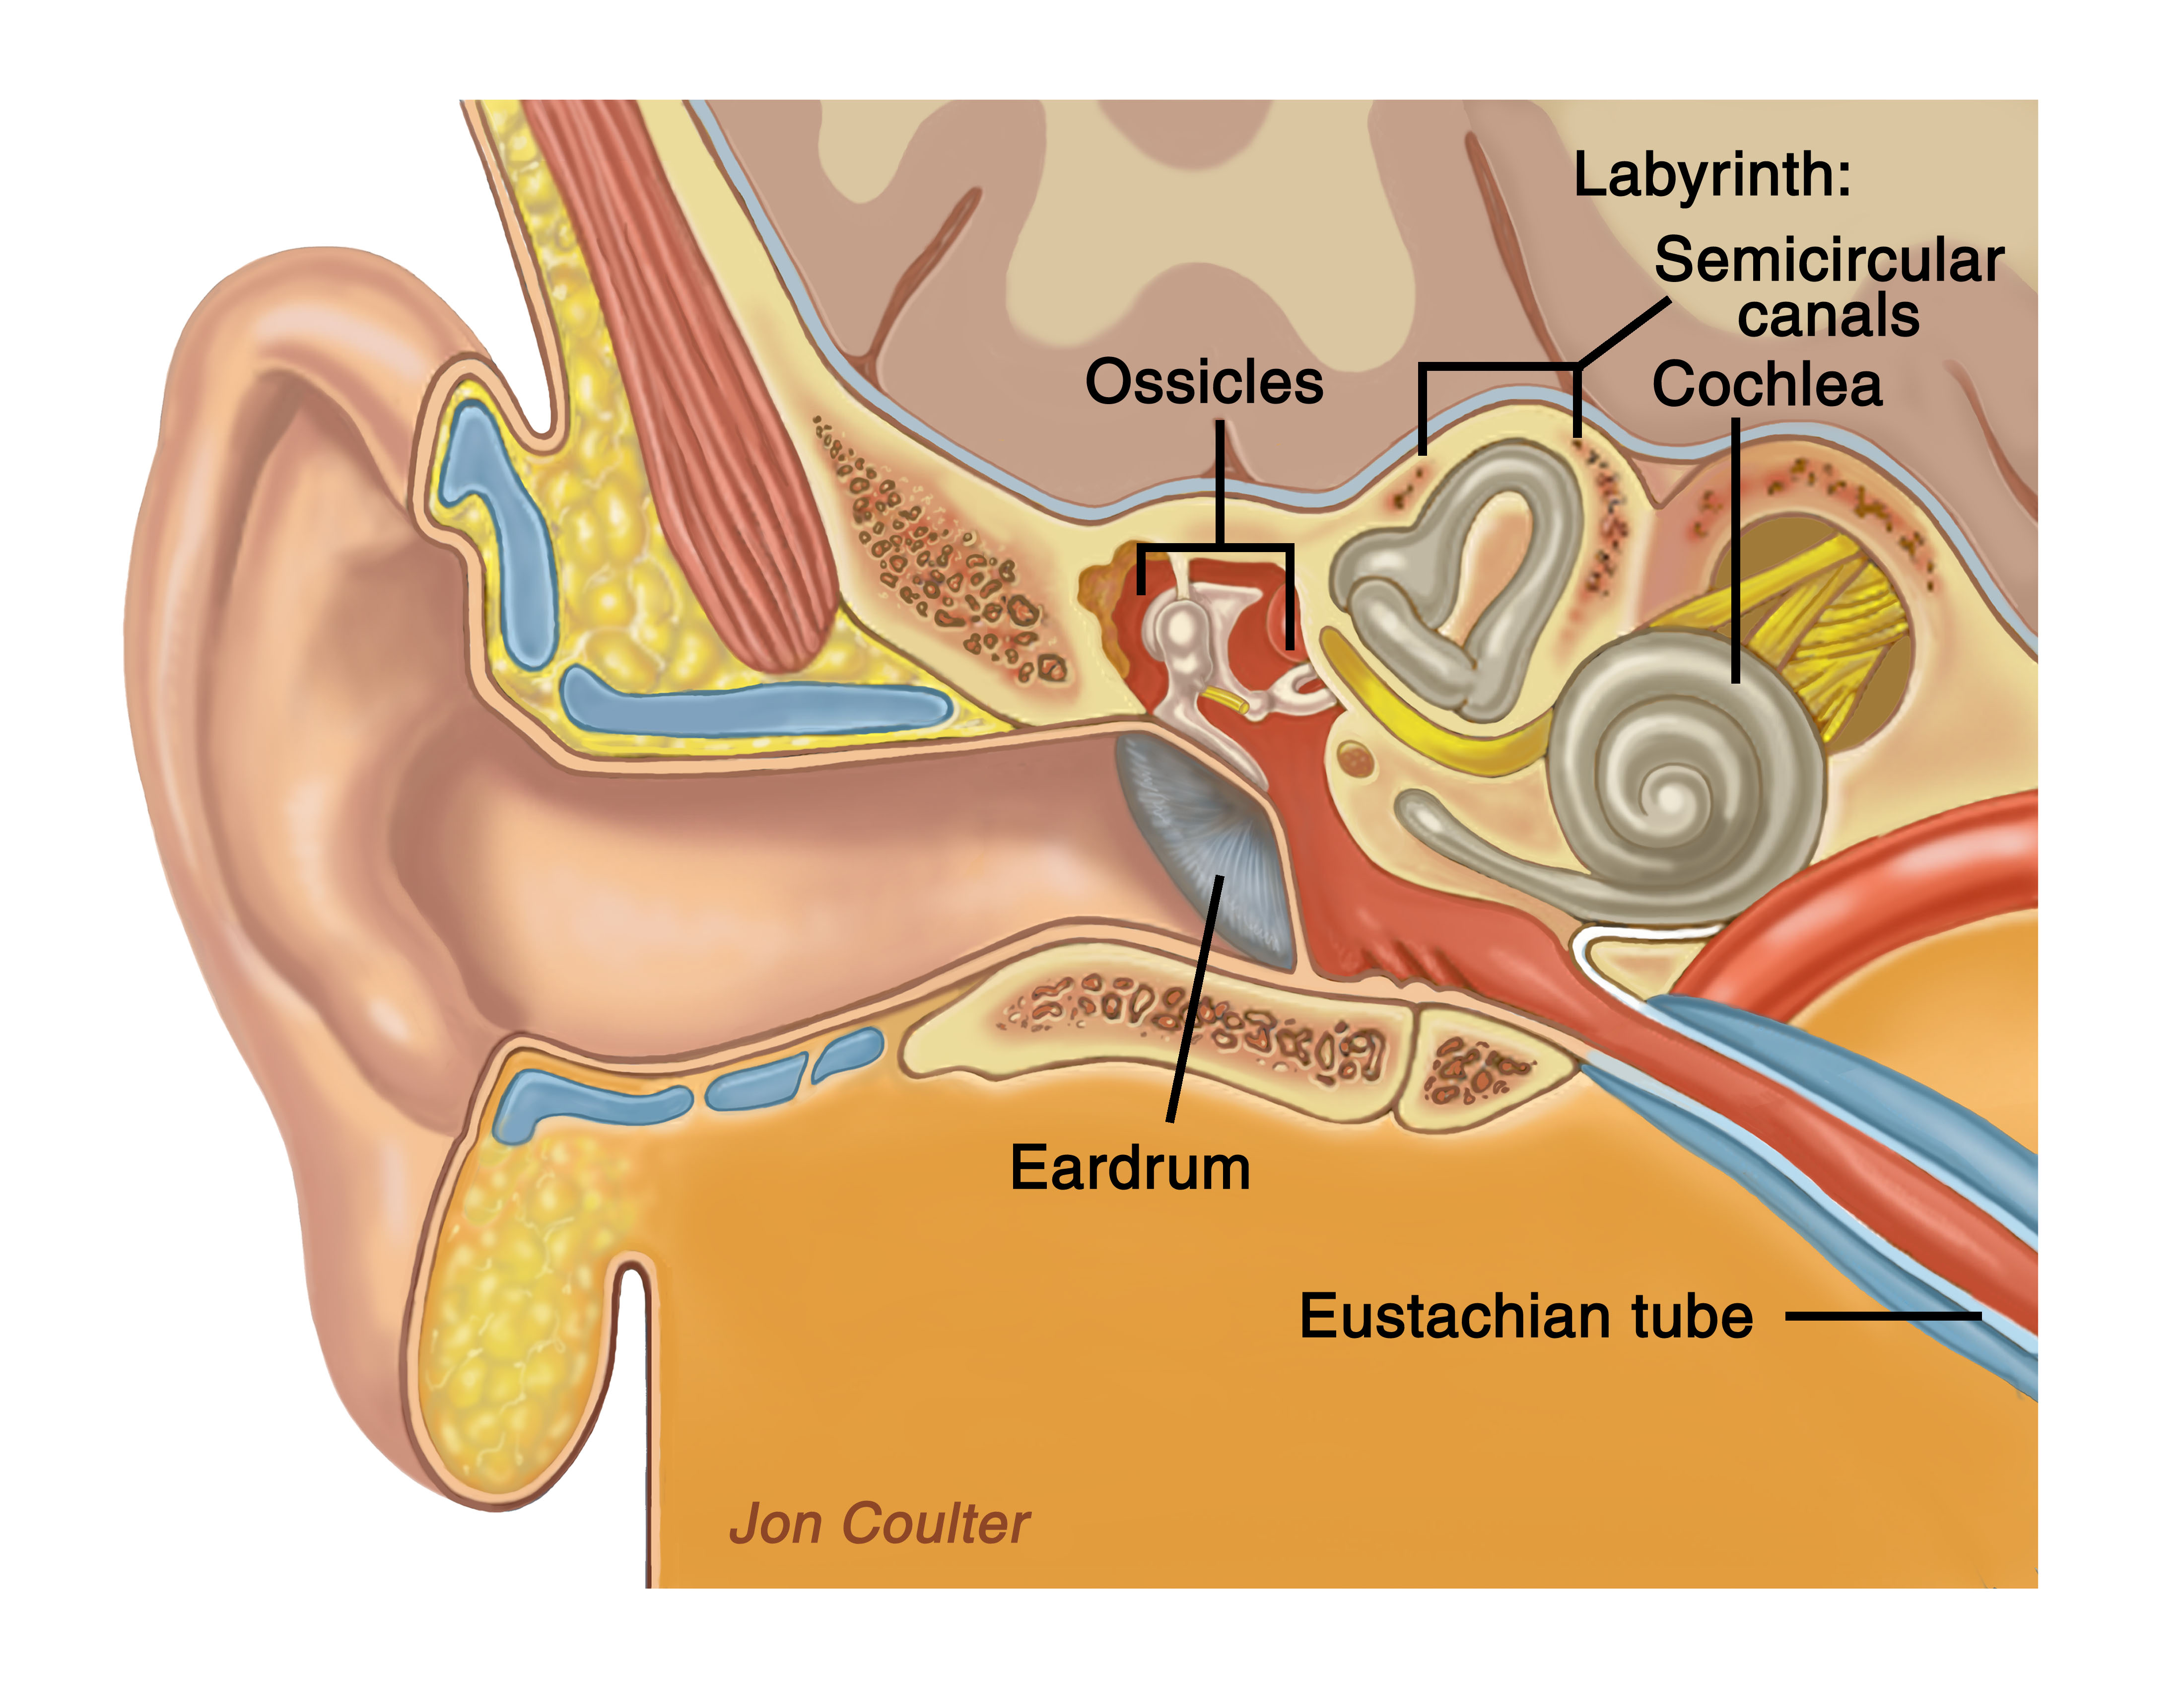 Ear Canal Anatomy